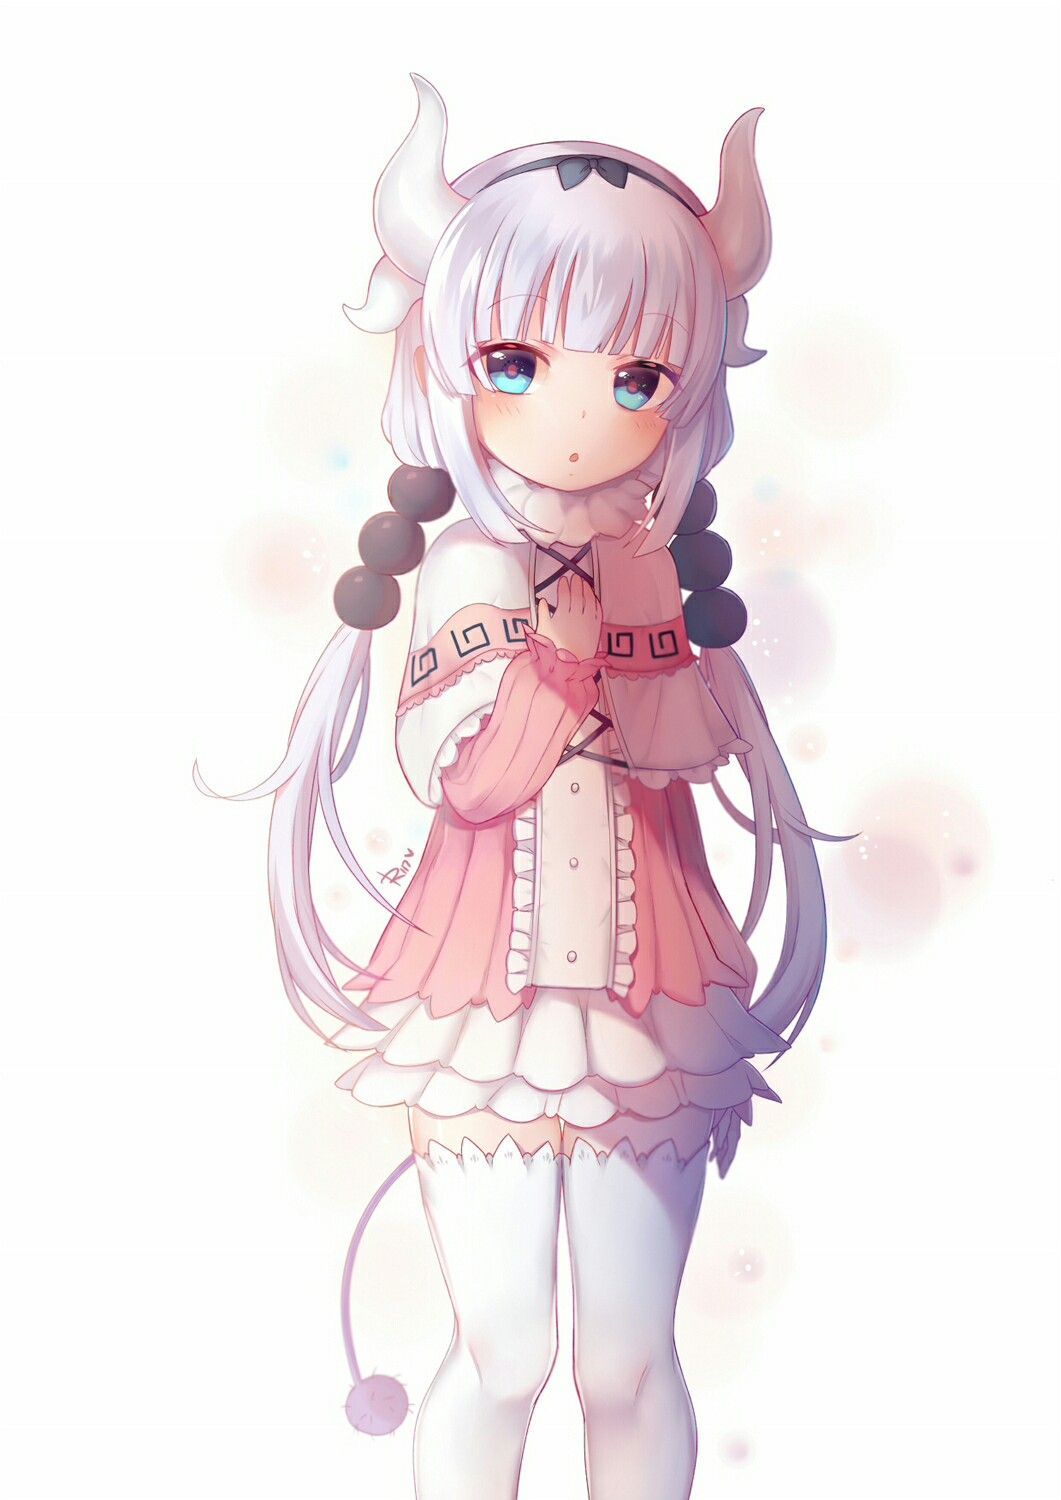 You a cute anime girl on a cute dragon by Orenbenor | Fiverr